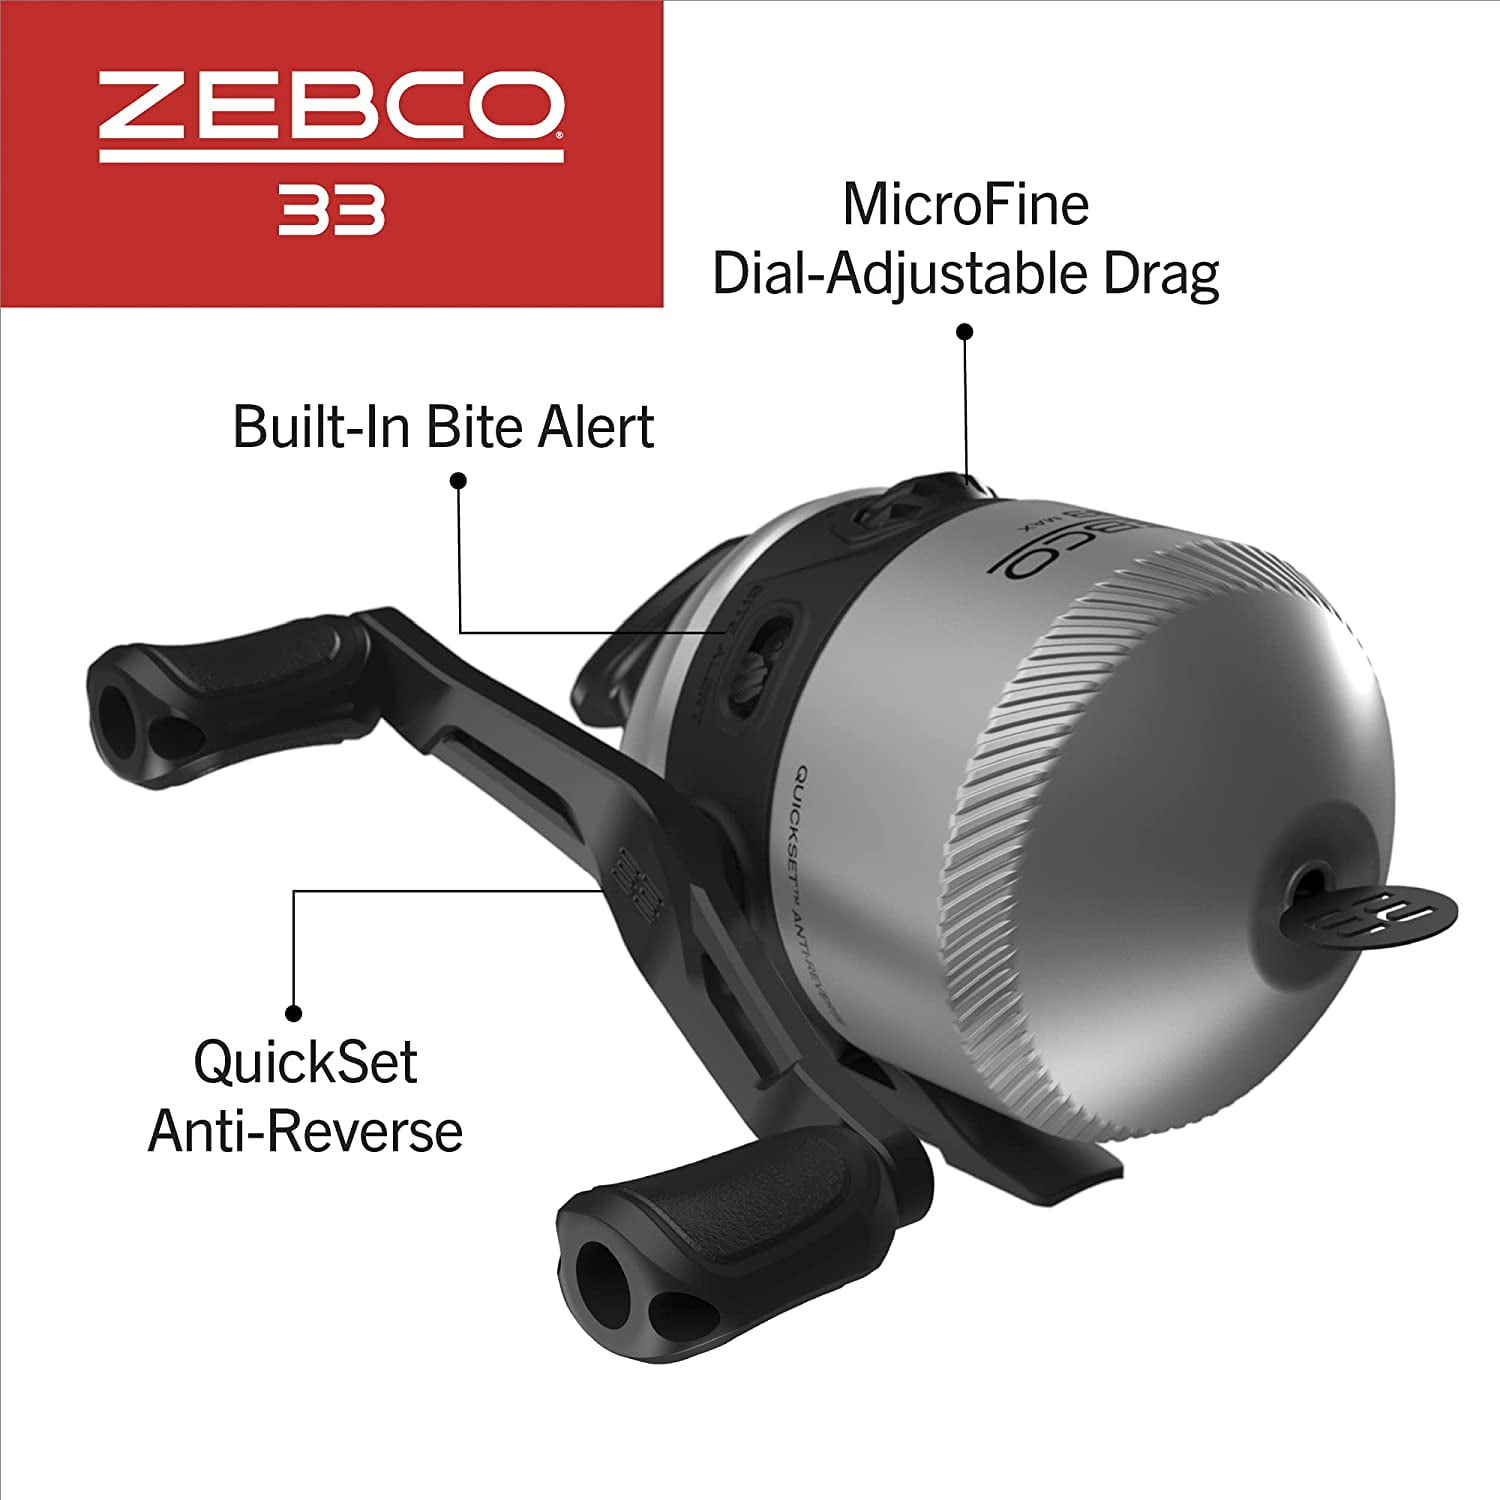 Zebco 33 RHINO TOUGH Closed Face Spincast Reel-Adjustable  Drag-Anti-Reverse